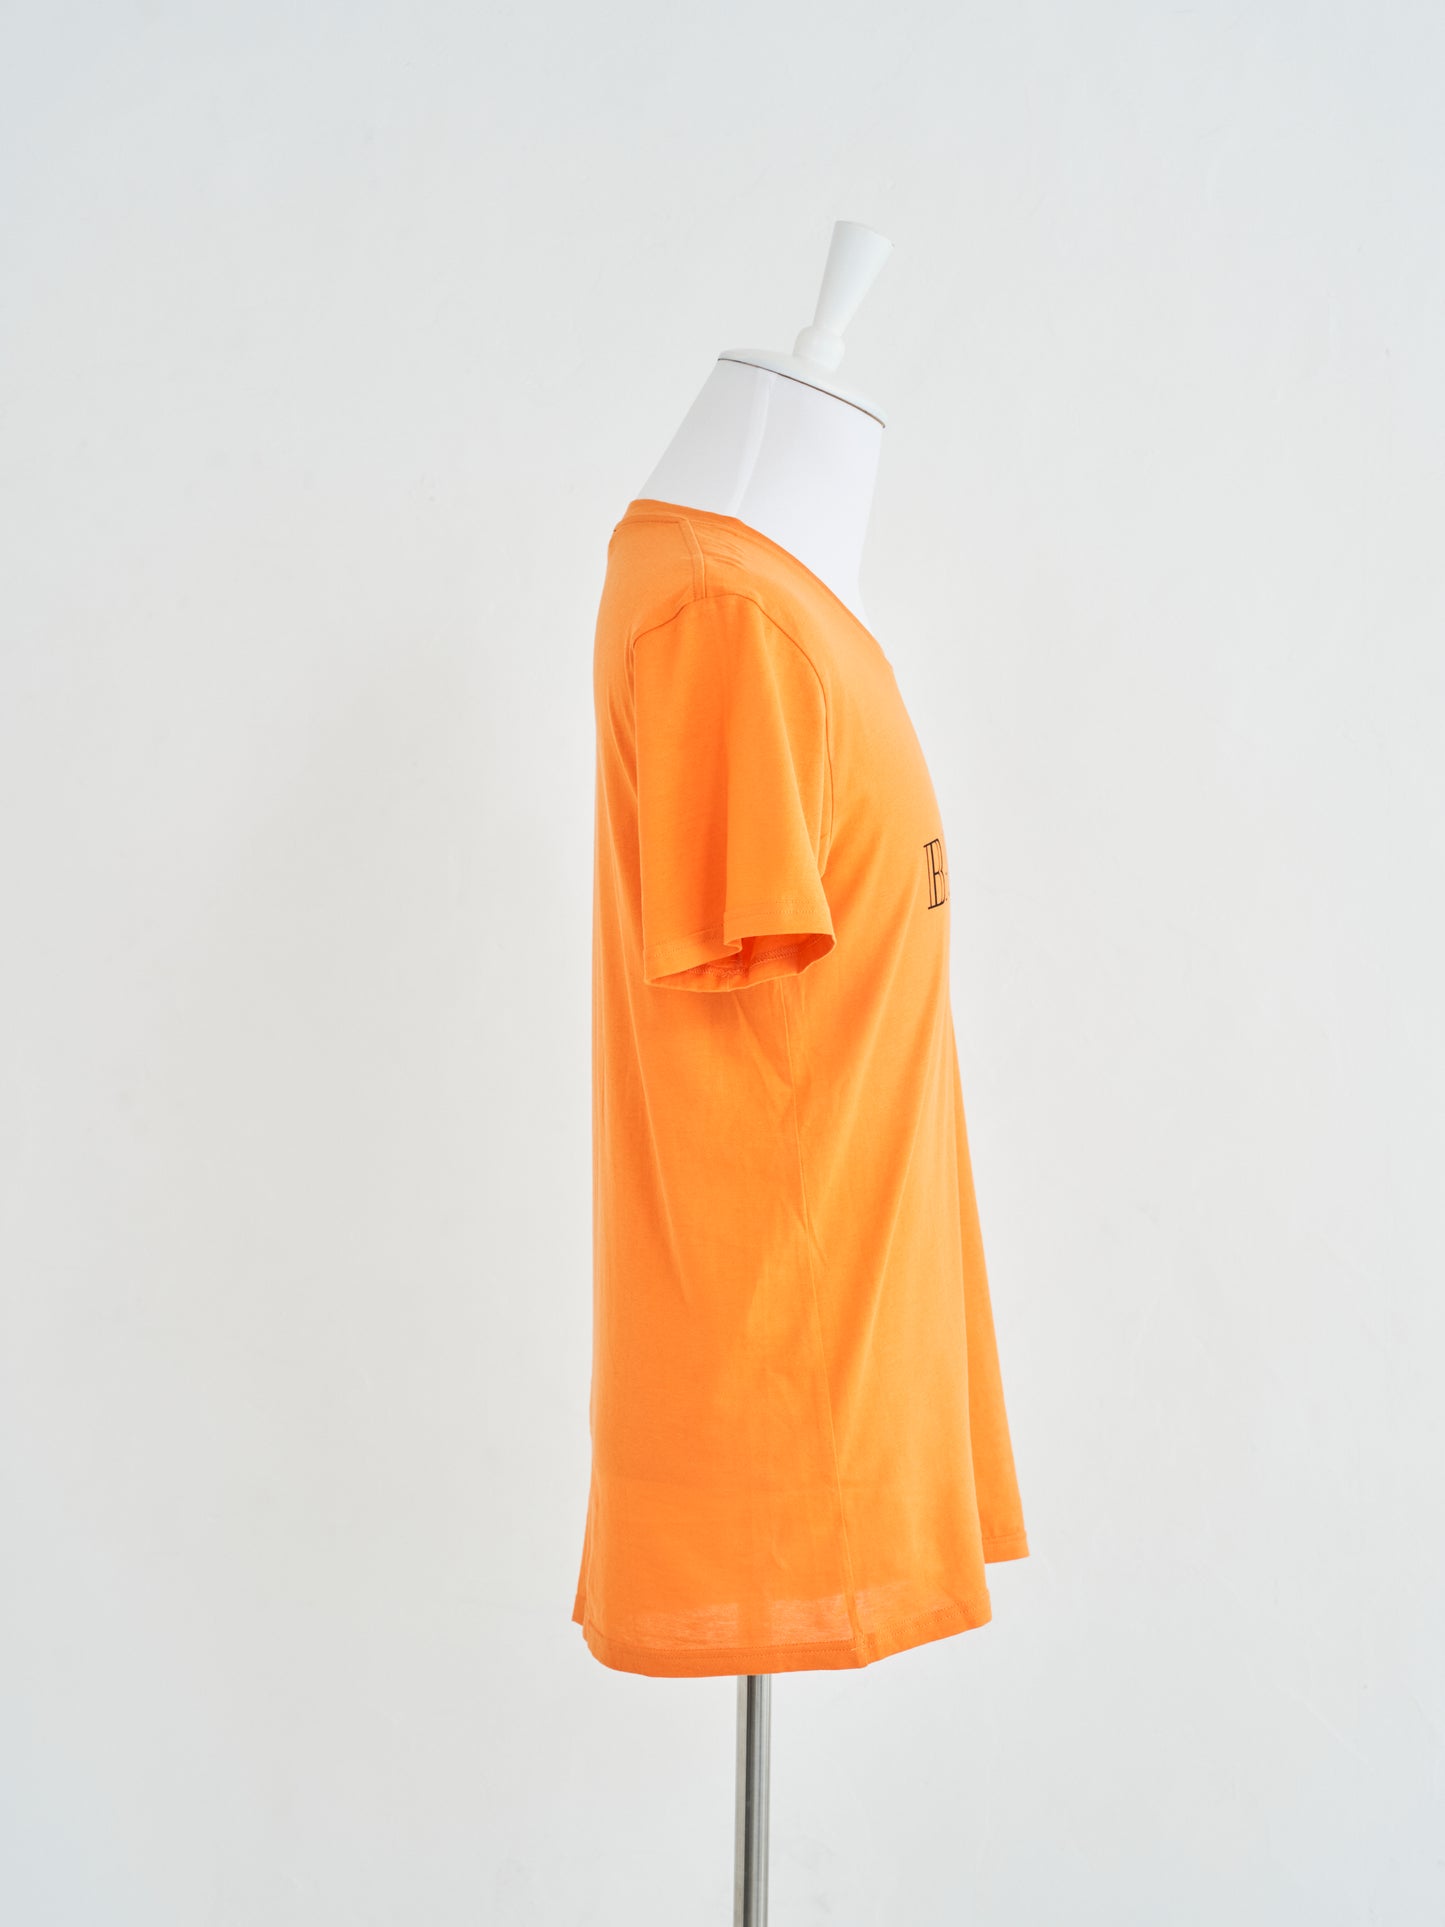 [BALMAIN] ブランドロゴTシャツ UPA02049